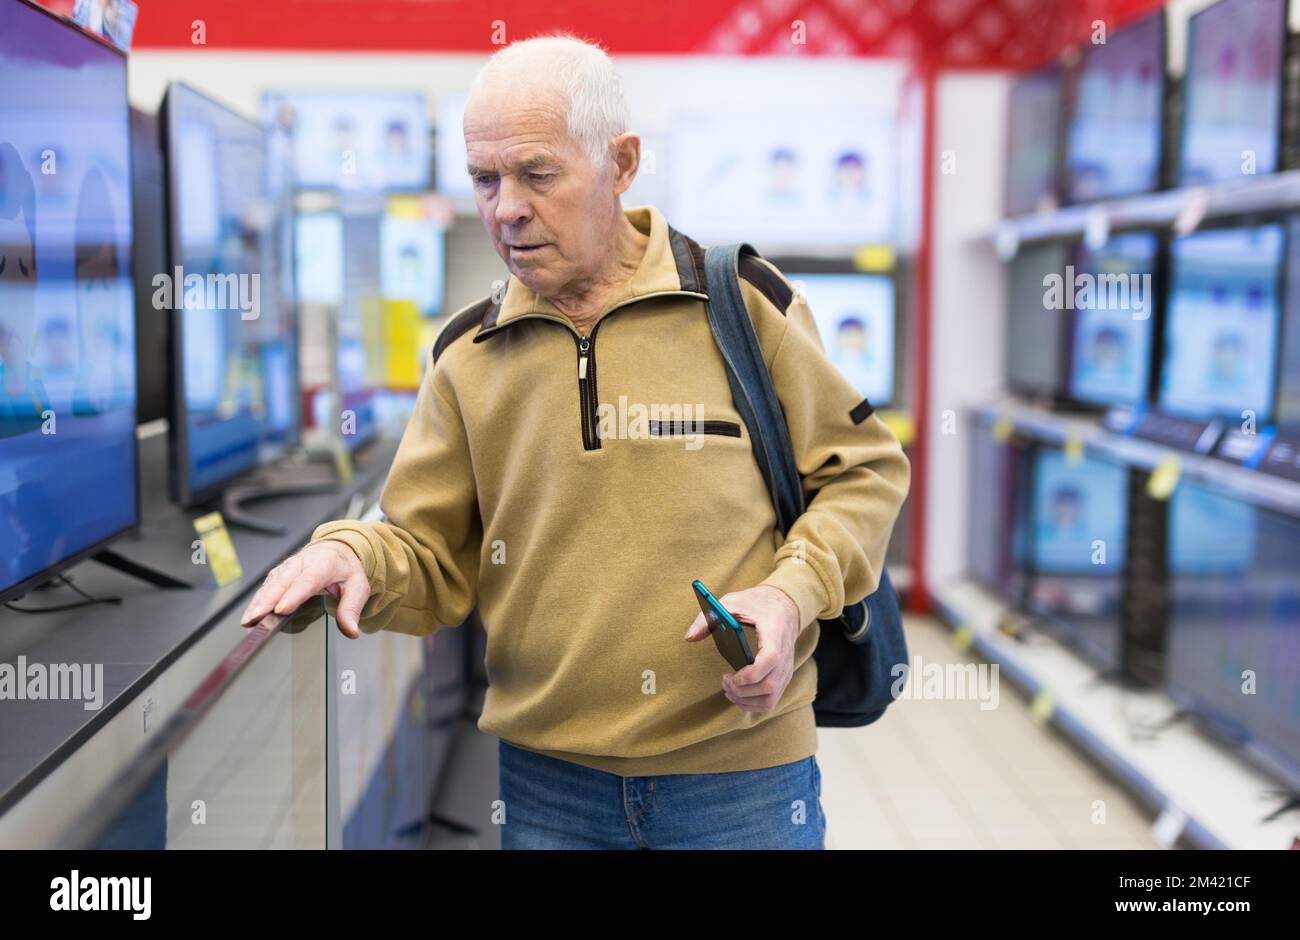 senor man pensioner buying modern digital televisor with smart tv in showroom of digital electronic goods store Stock Photo